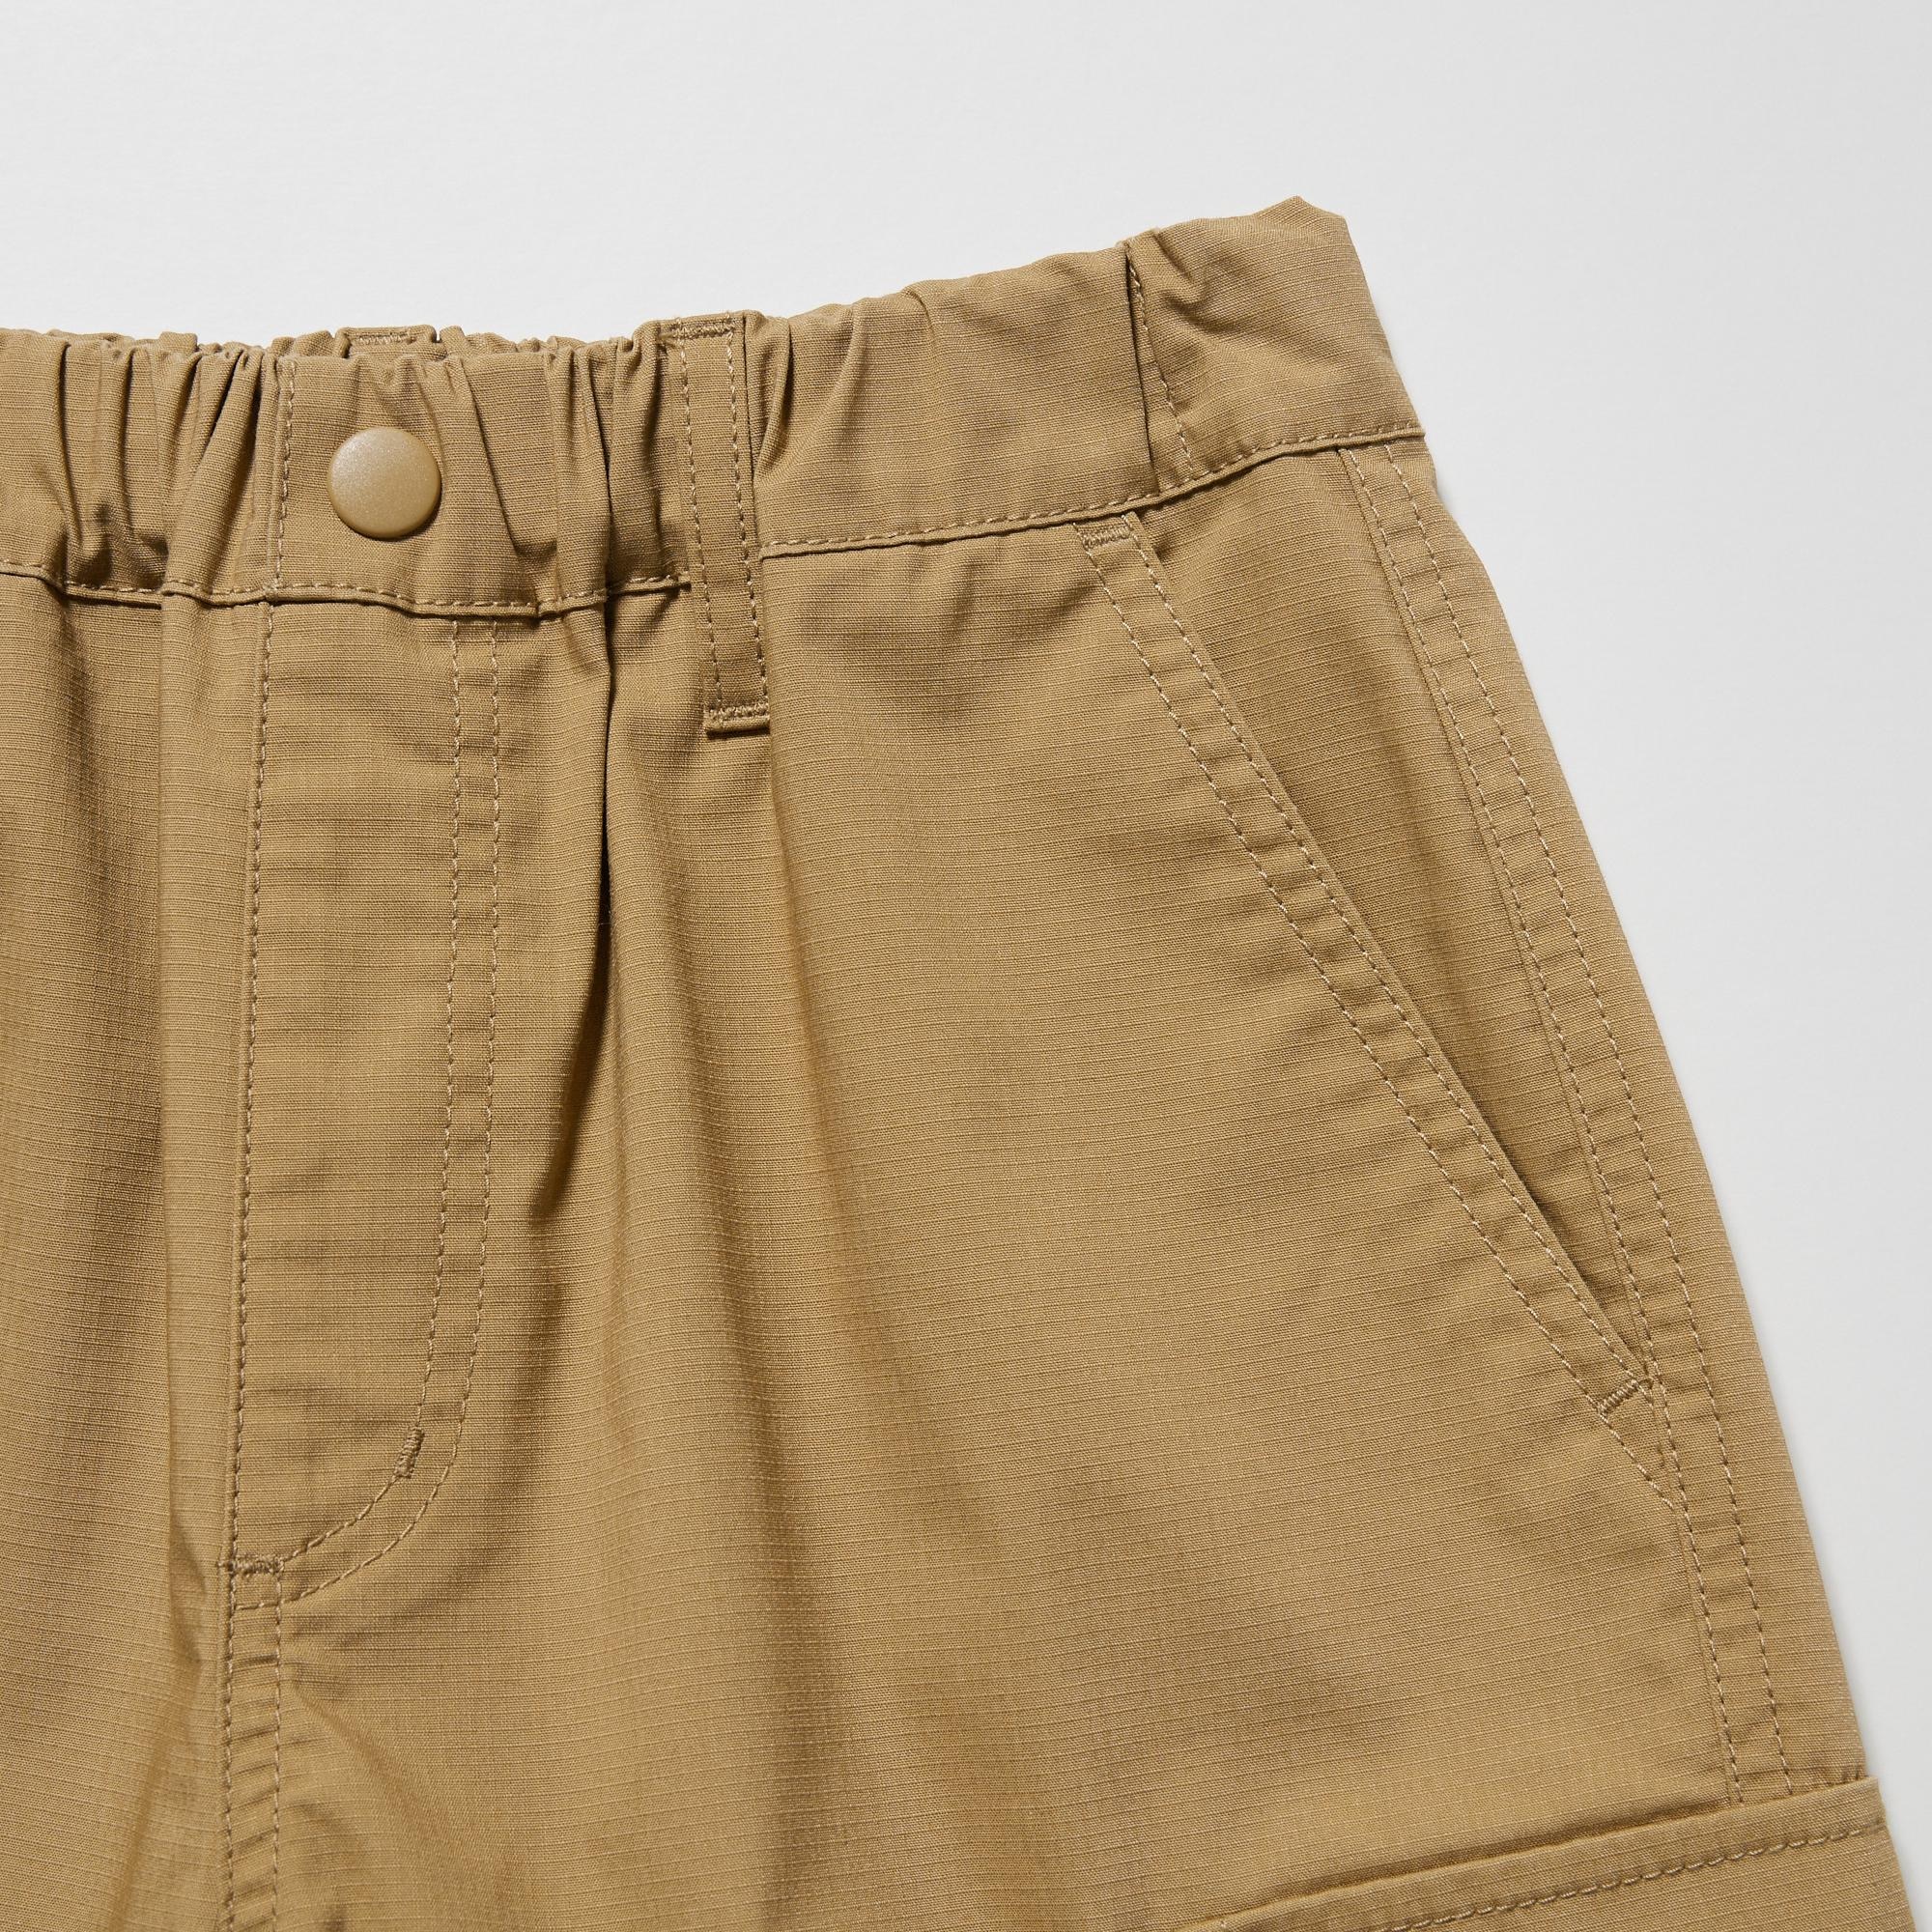 12 Half pant ideas  cargo shorts cargo shorts men mens outfits